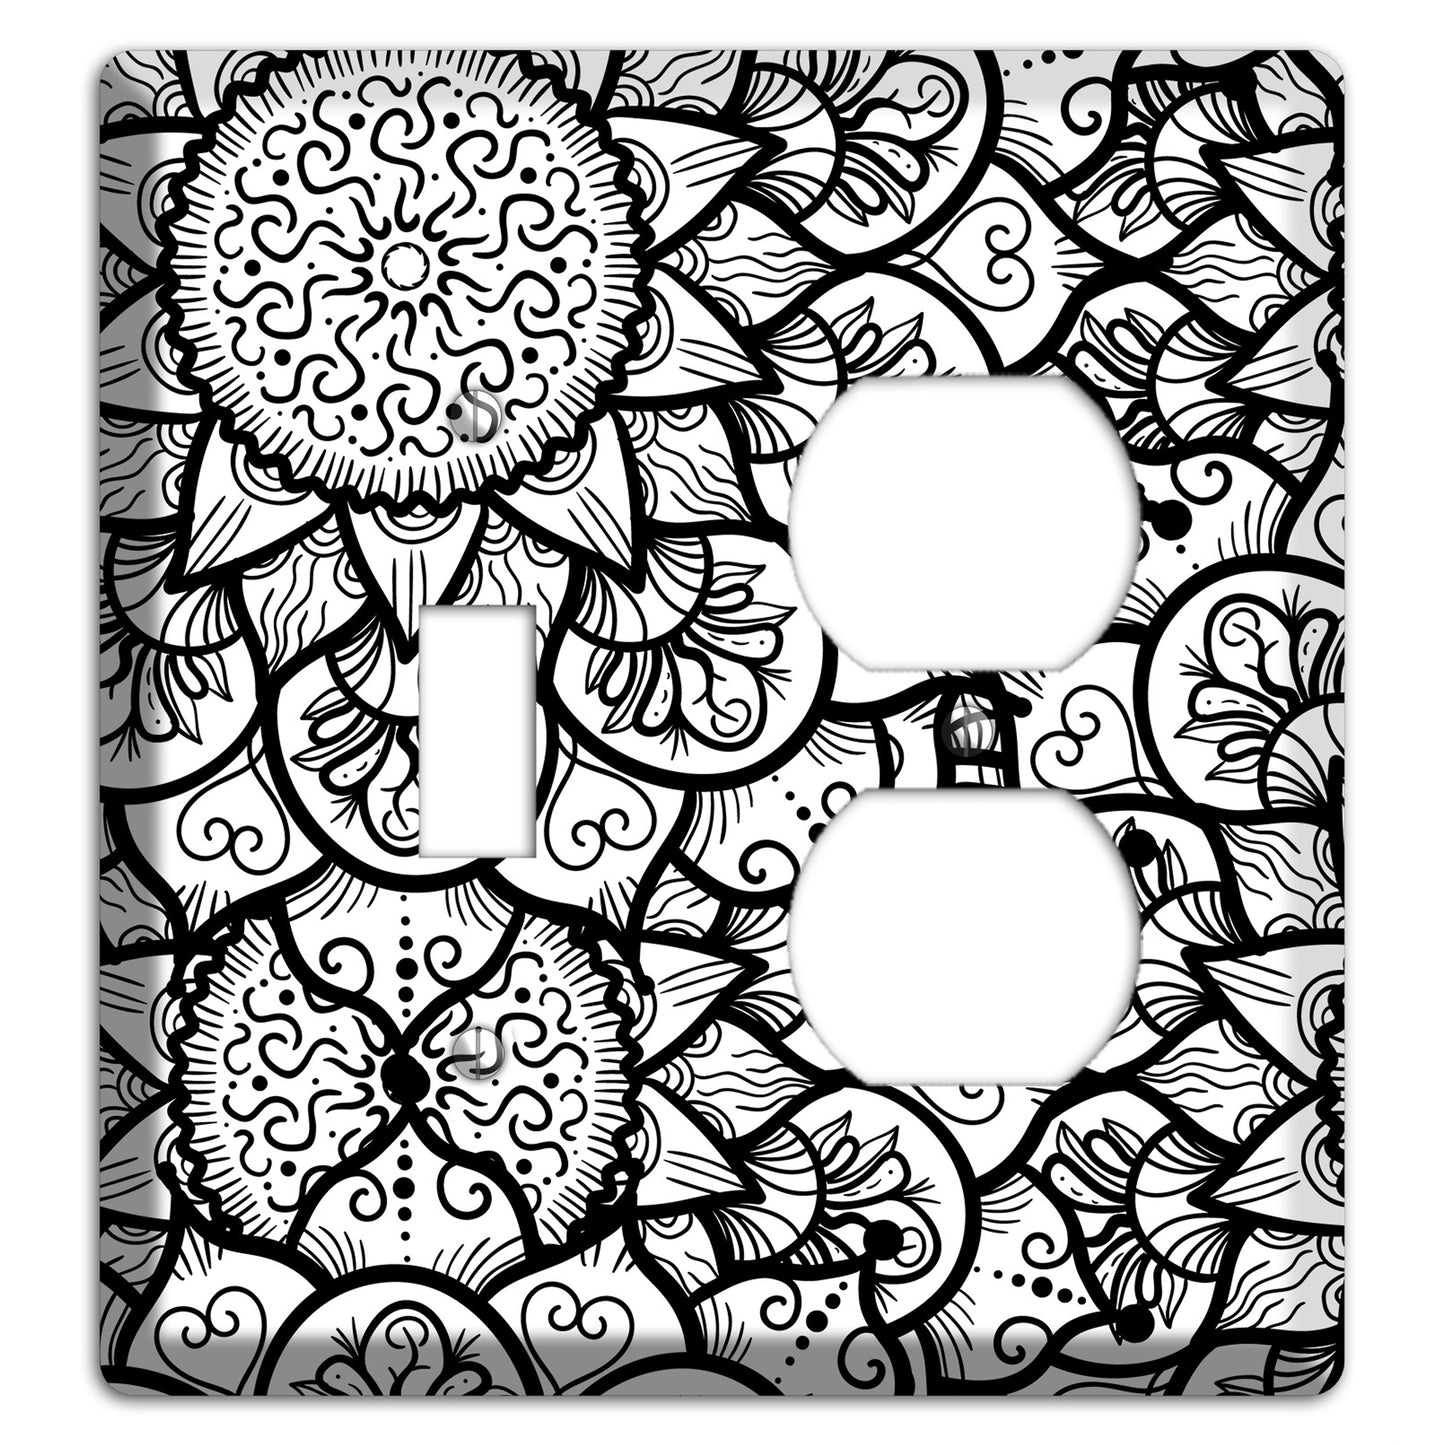 Mandala Black and White Style W Cover Plates Toggle / Duplex Wallplate